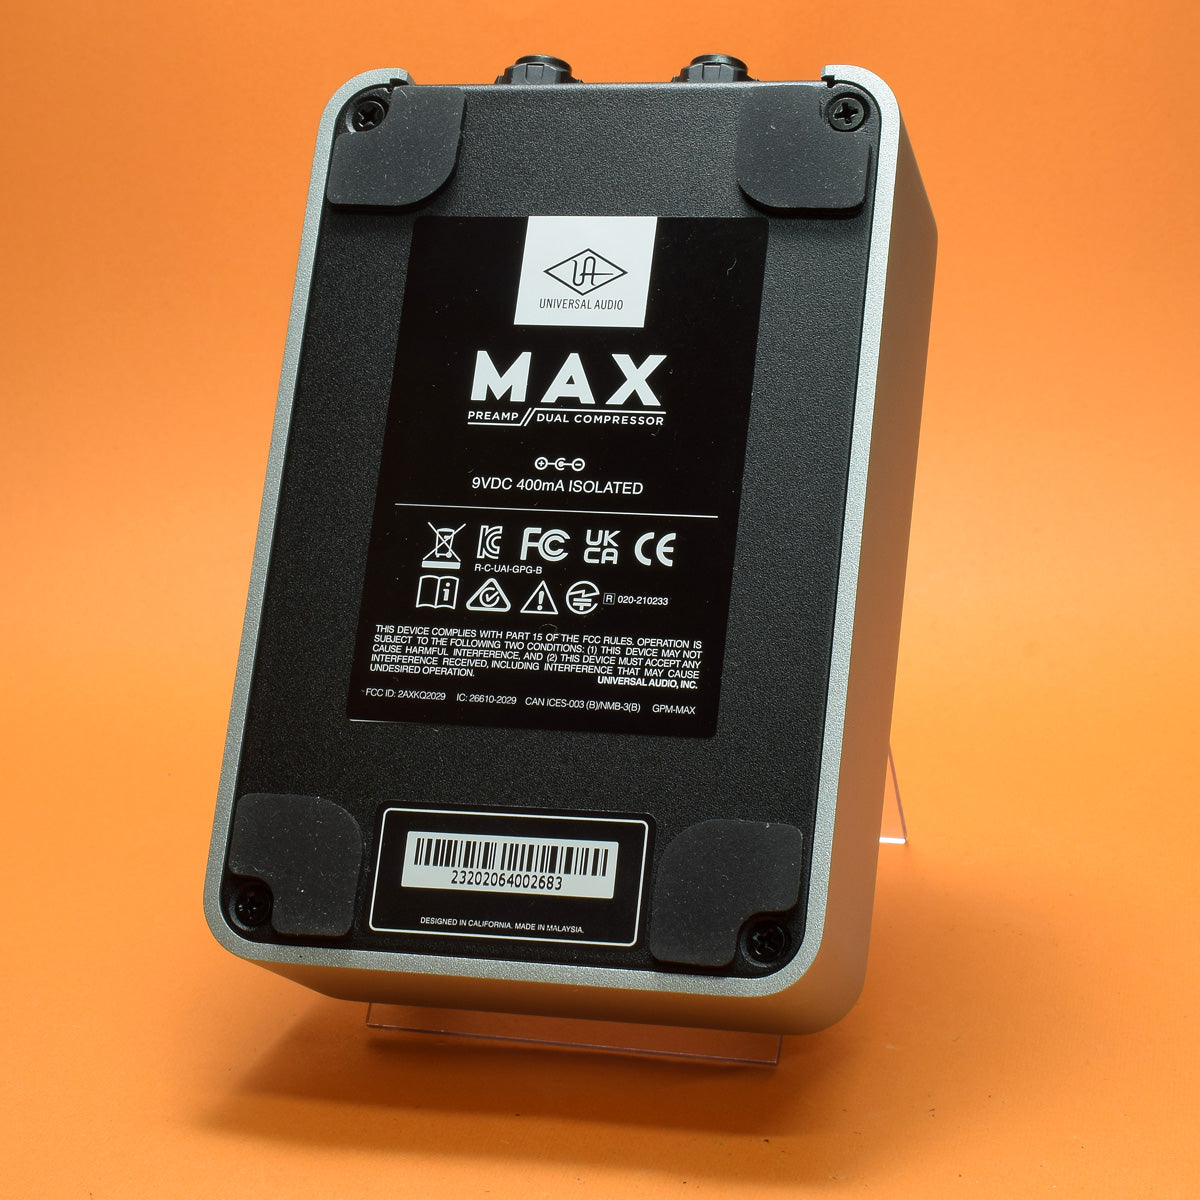 [SN 23202064002683] USED UNIVERSAL AUDIO Universal Audio / UAFX Max Preamp &amp; Dual Compressor [20]